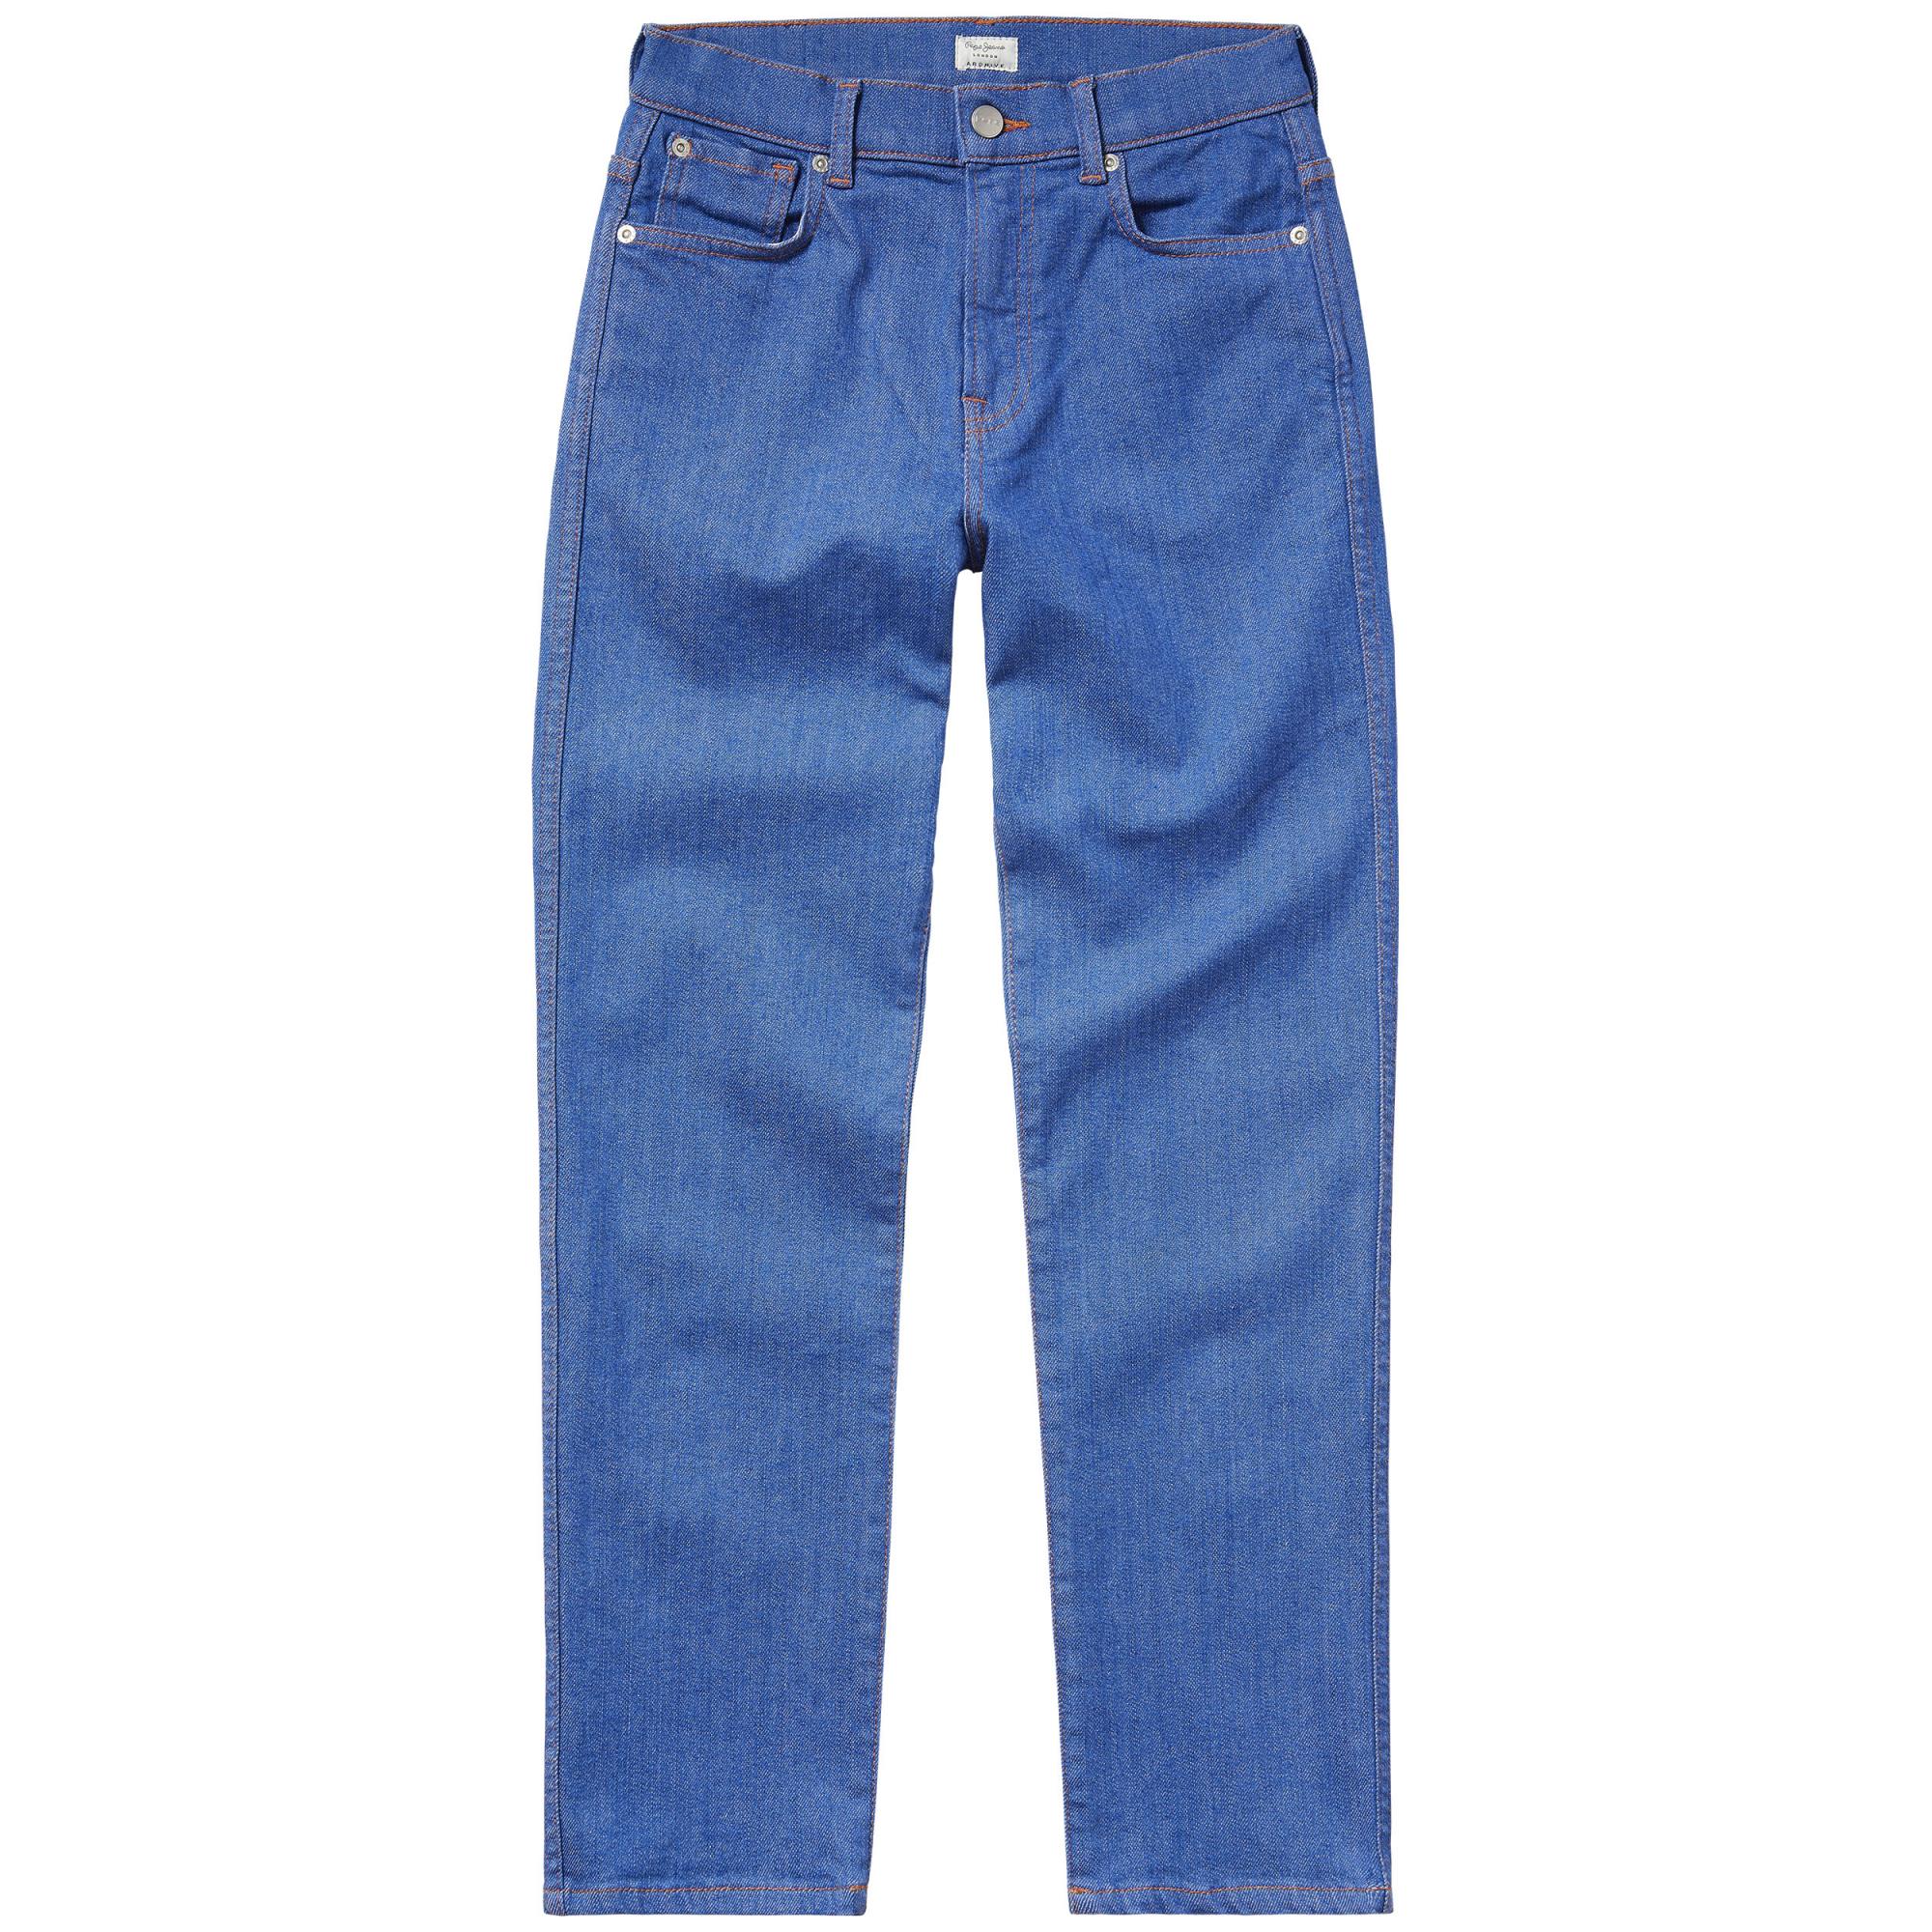 097.PL203166 джинсы betties blue pepe jeans 